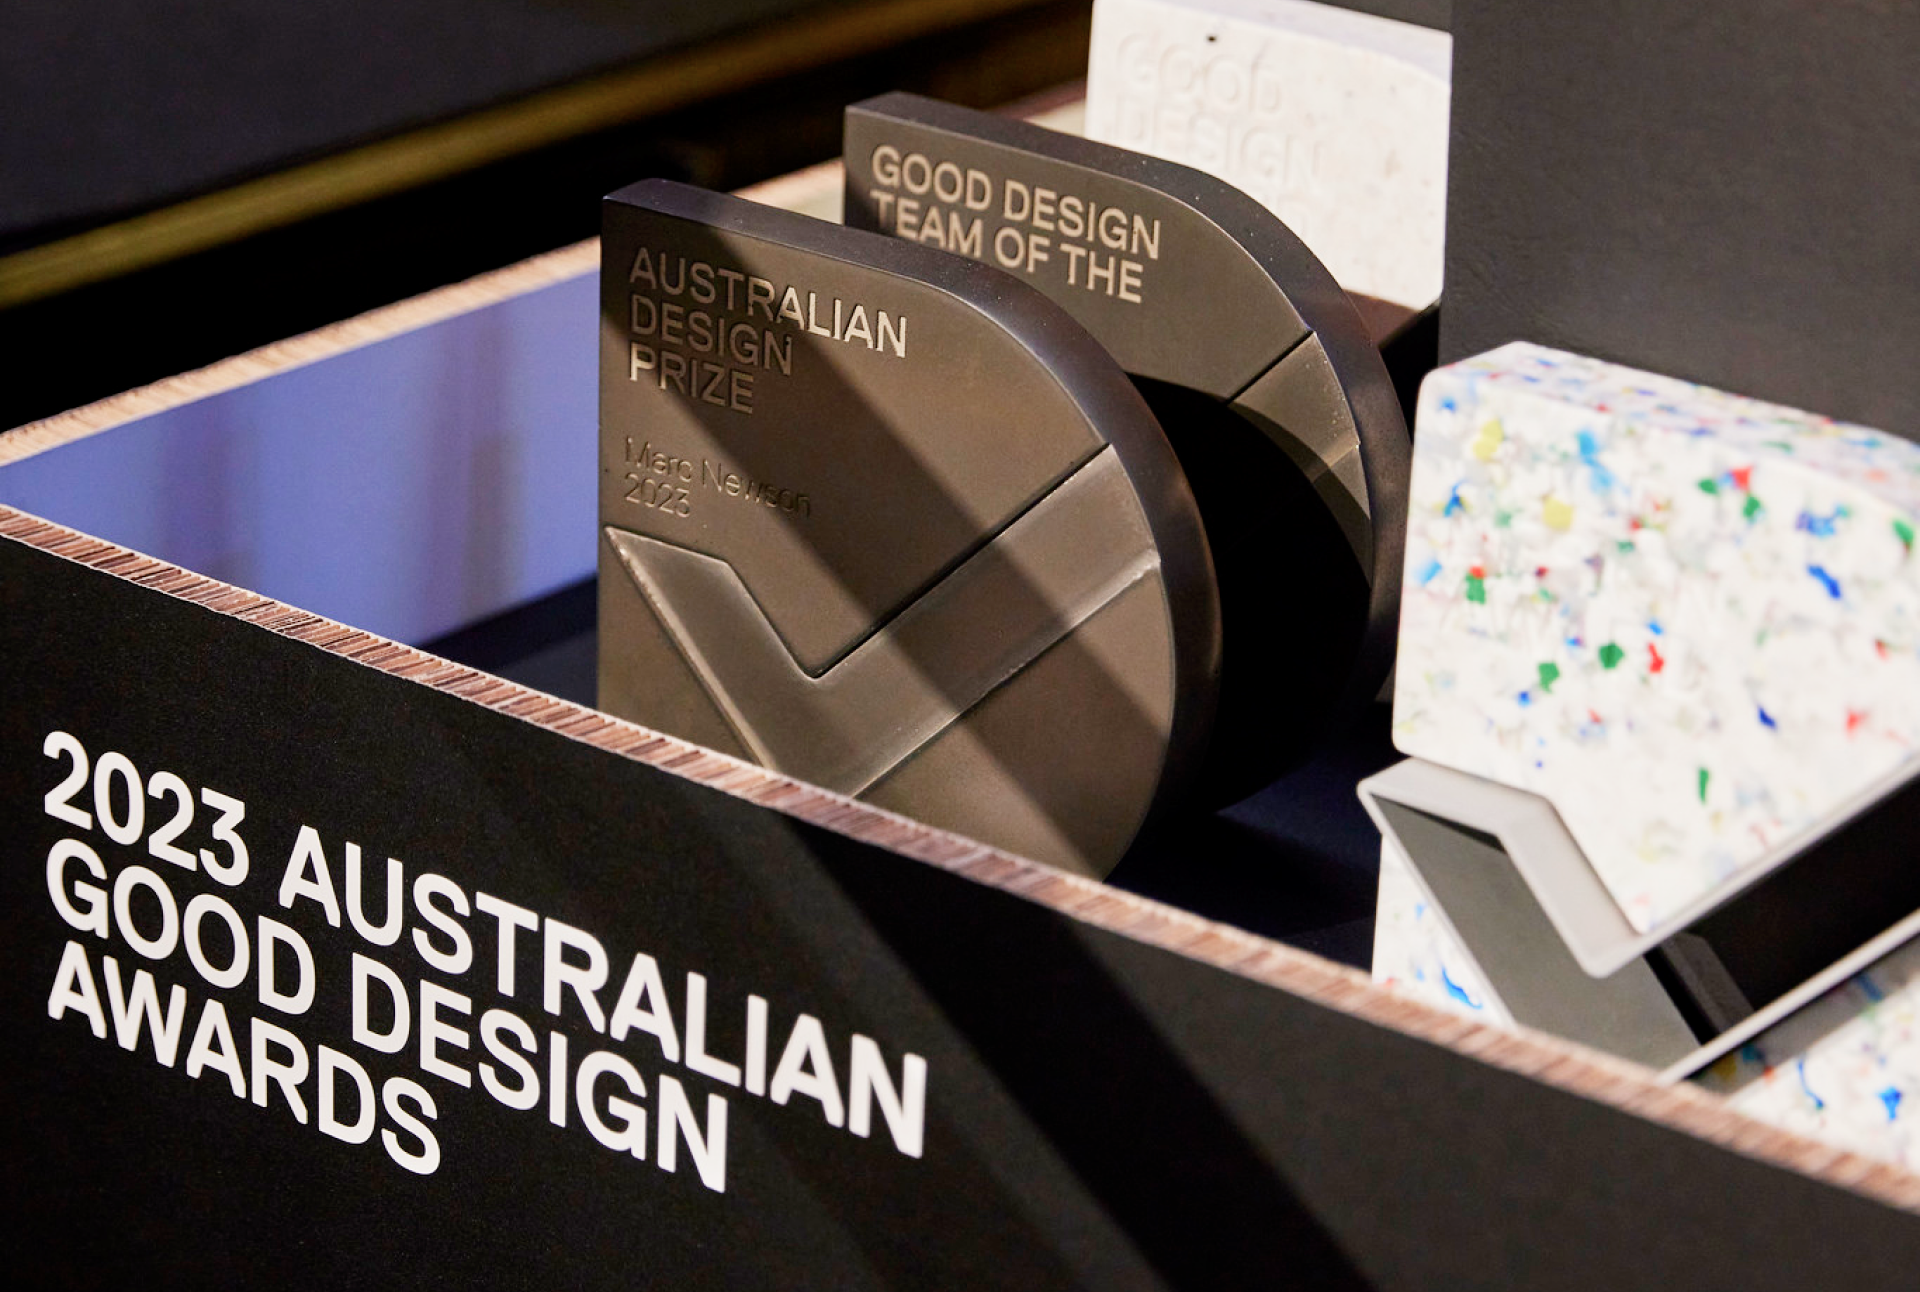 The Good Design Award Trophies